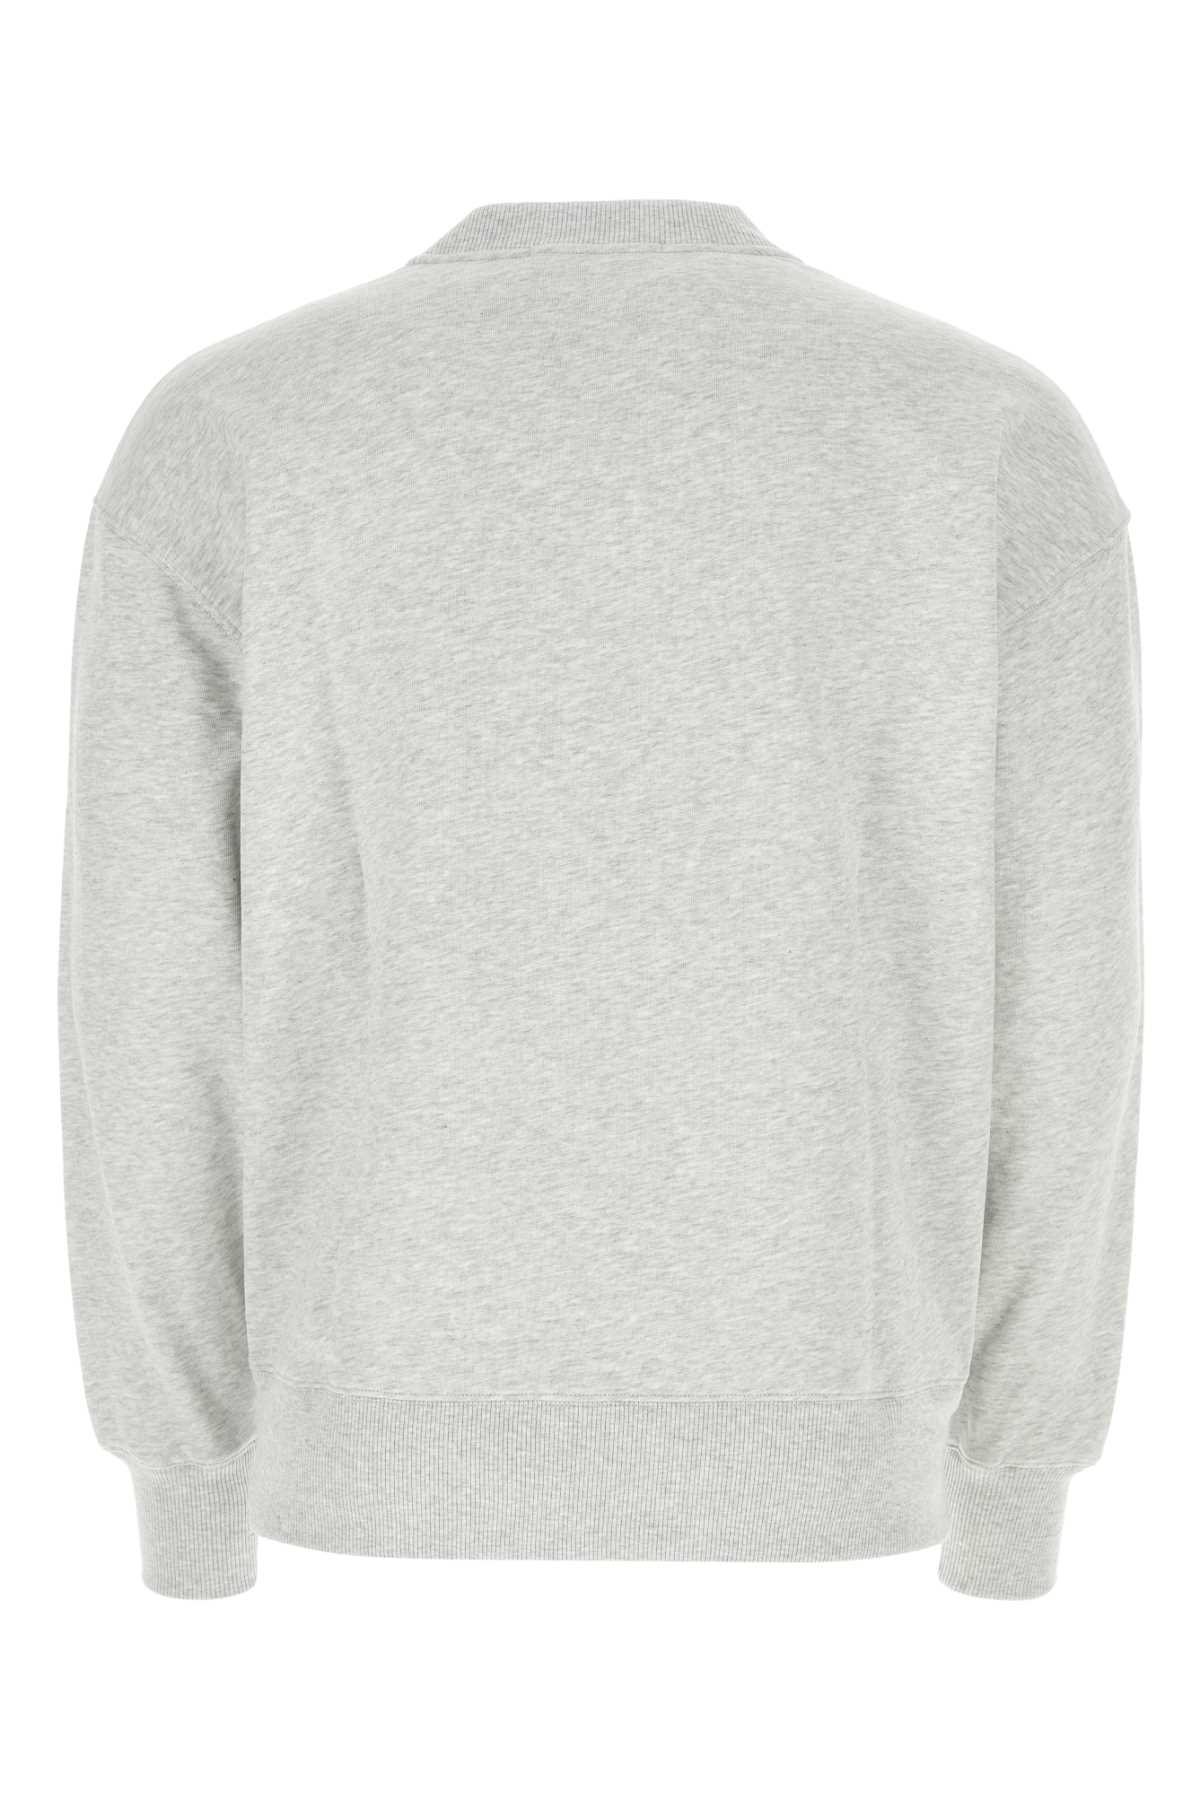 Msgm Melange Grey Cotton Sweatshirt In Lightgrey94